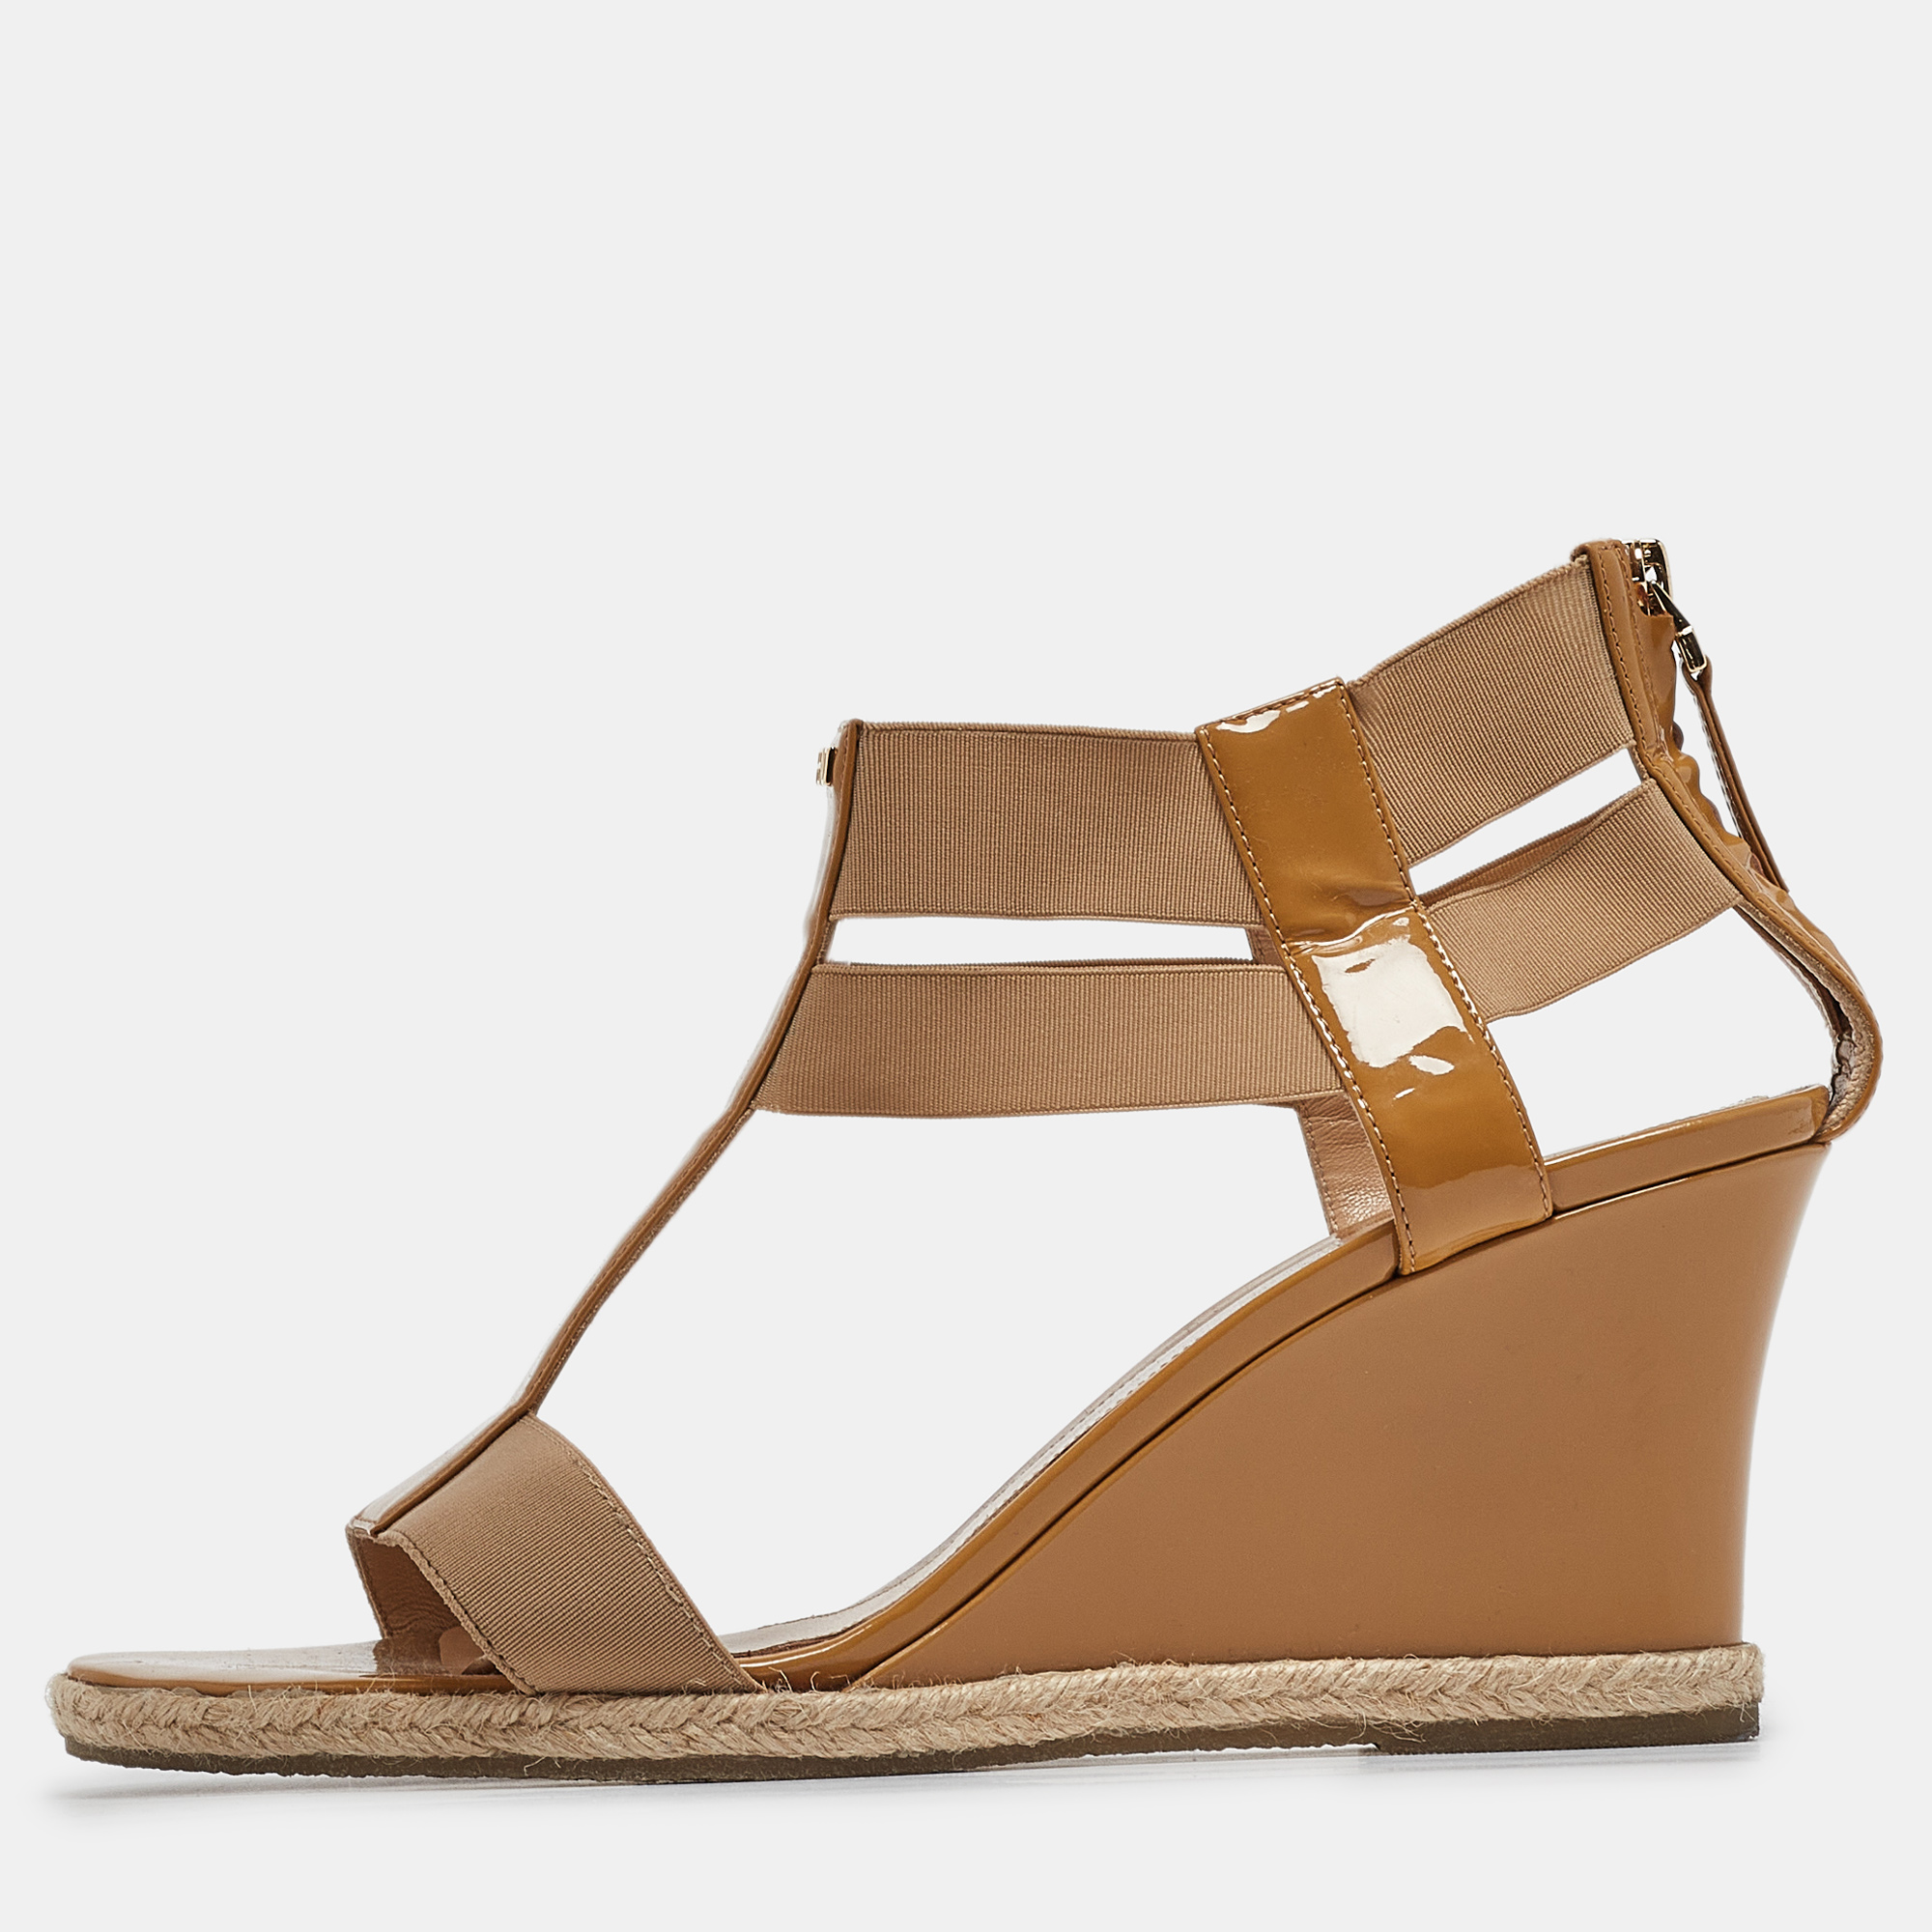 Fendi brown patent elastic wedge sandals size 39